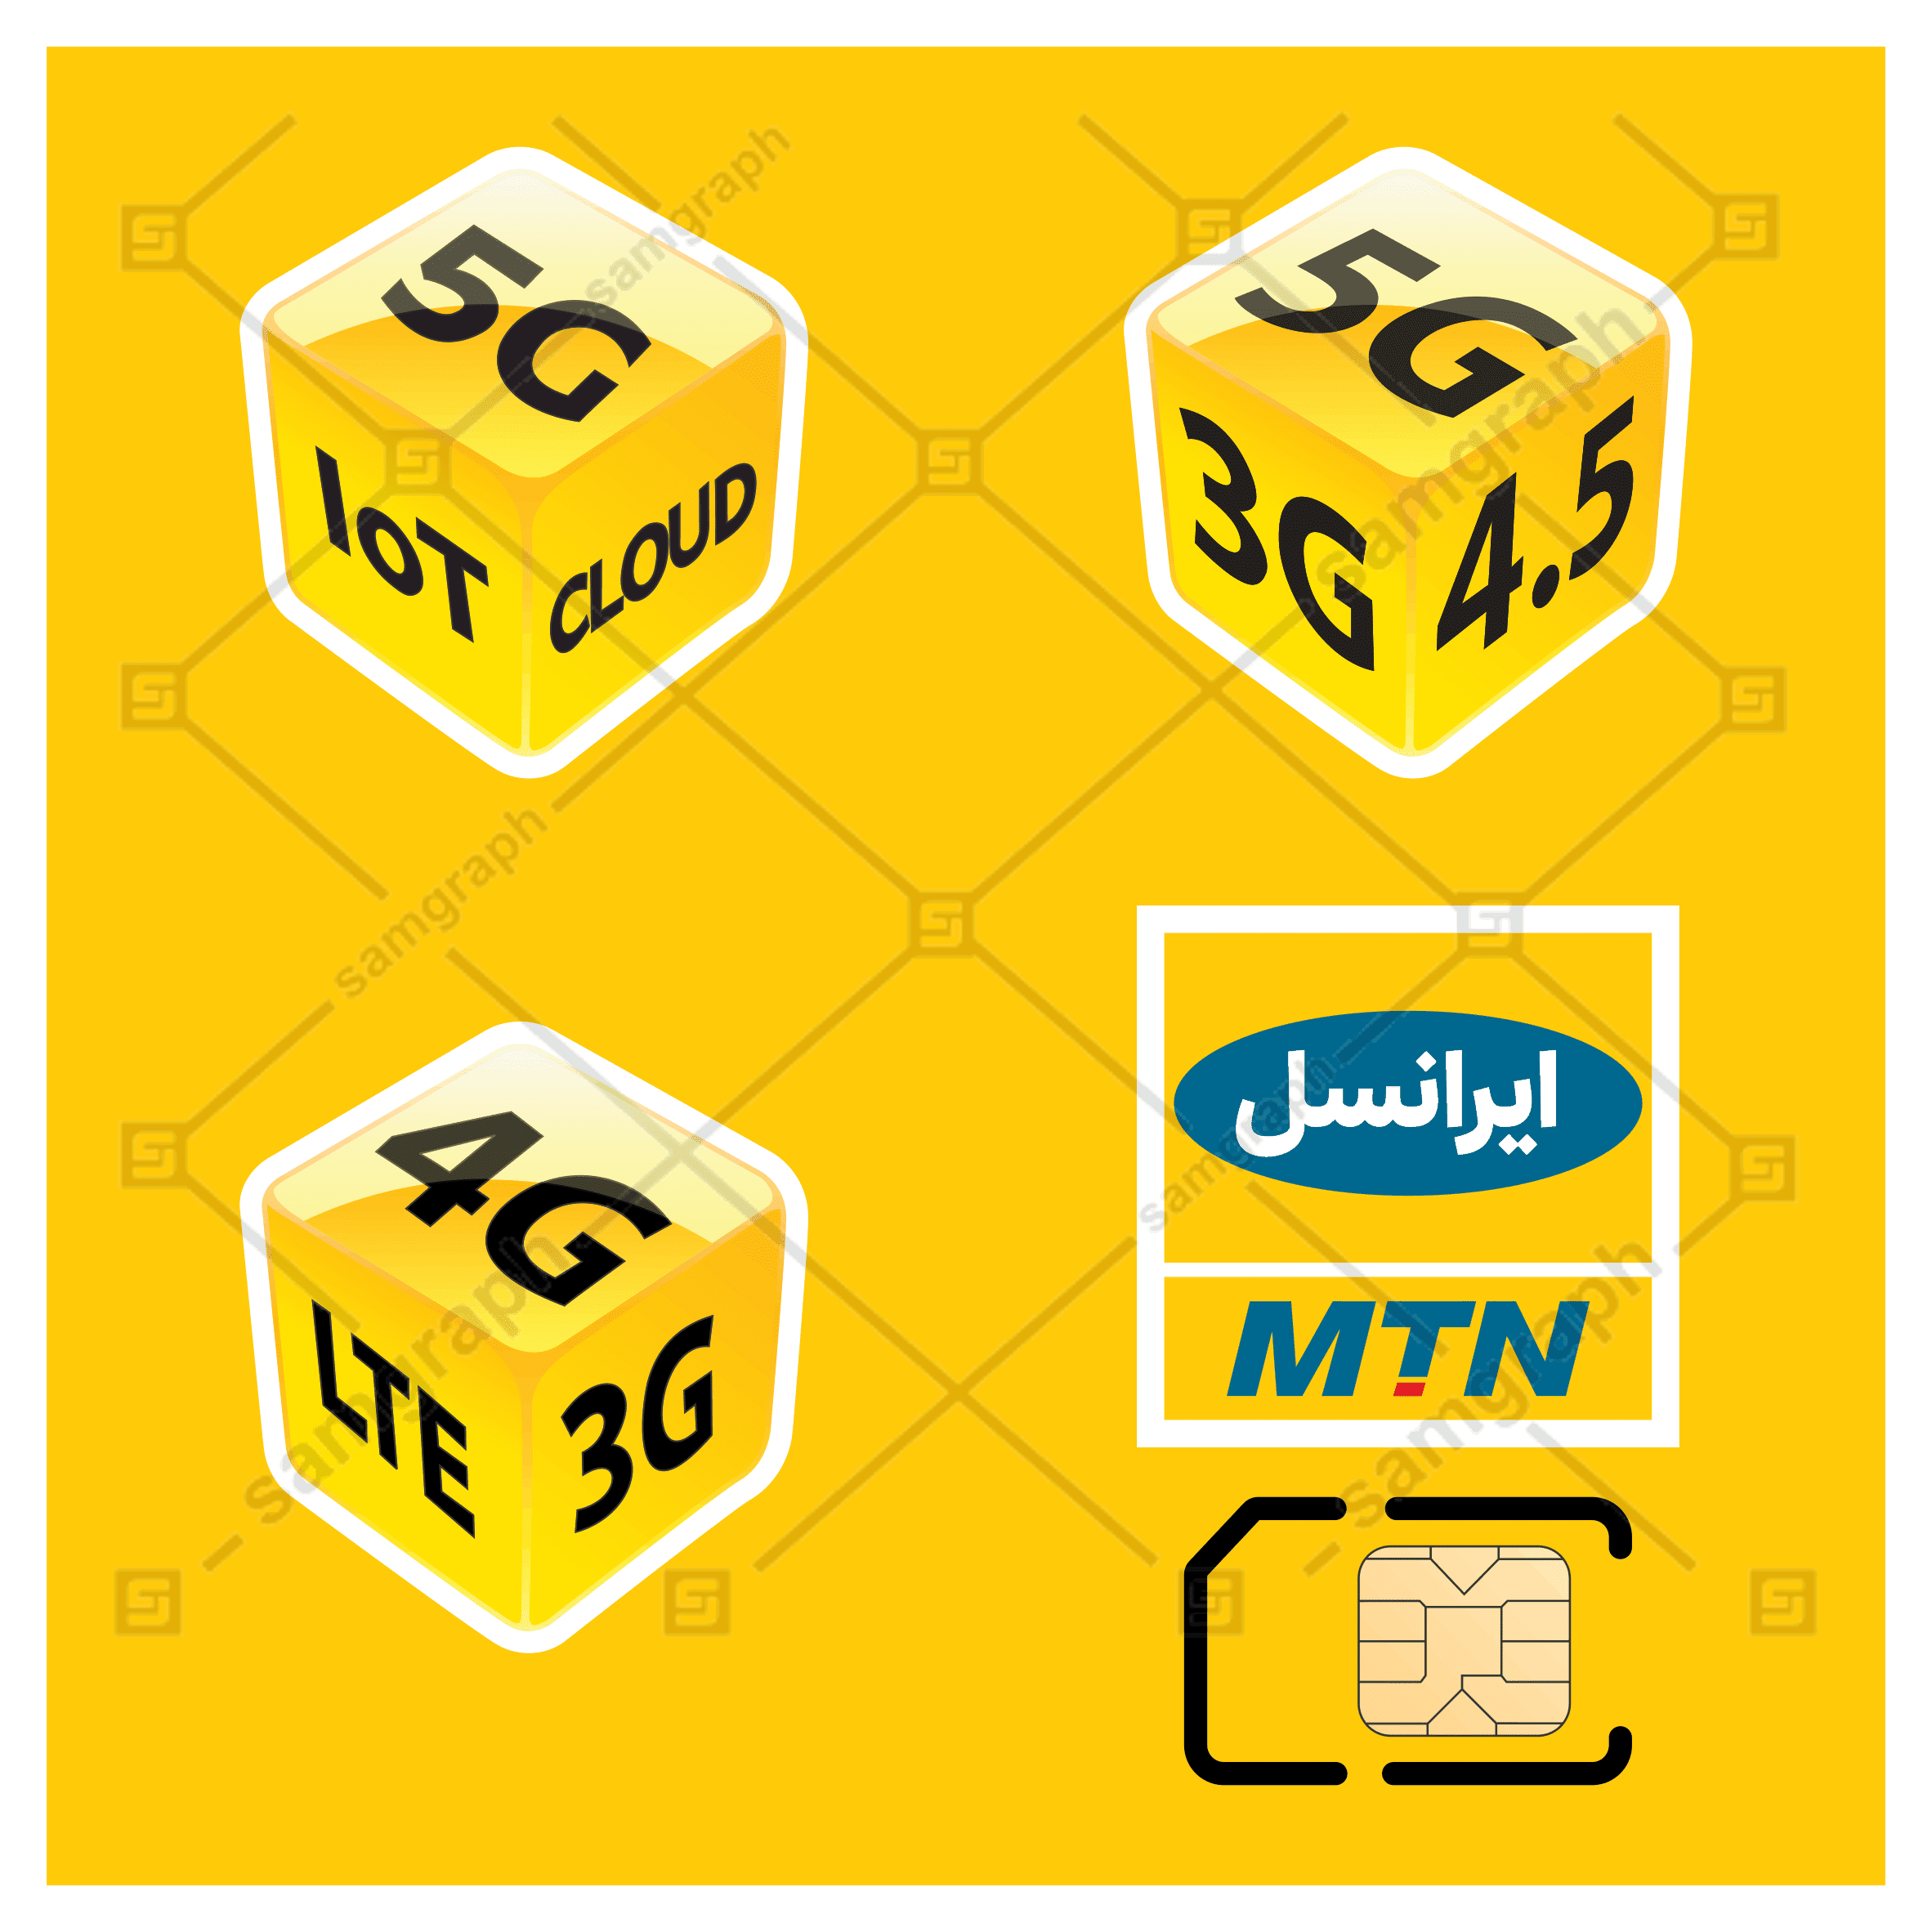 دانلود وکتور و طرح لوگو و آرم جدید و اصلی اپراتور ایرانسل - MTN Irancell - 5G - 3G - loT - CLOUD - سیم کارت